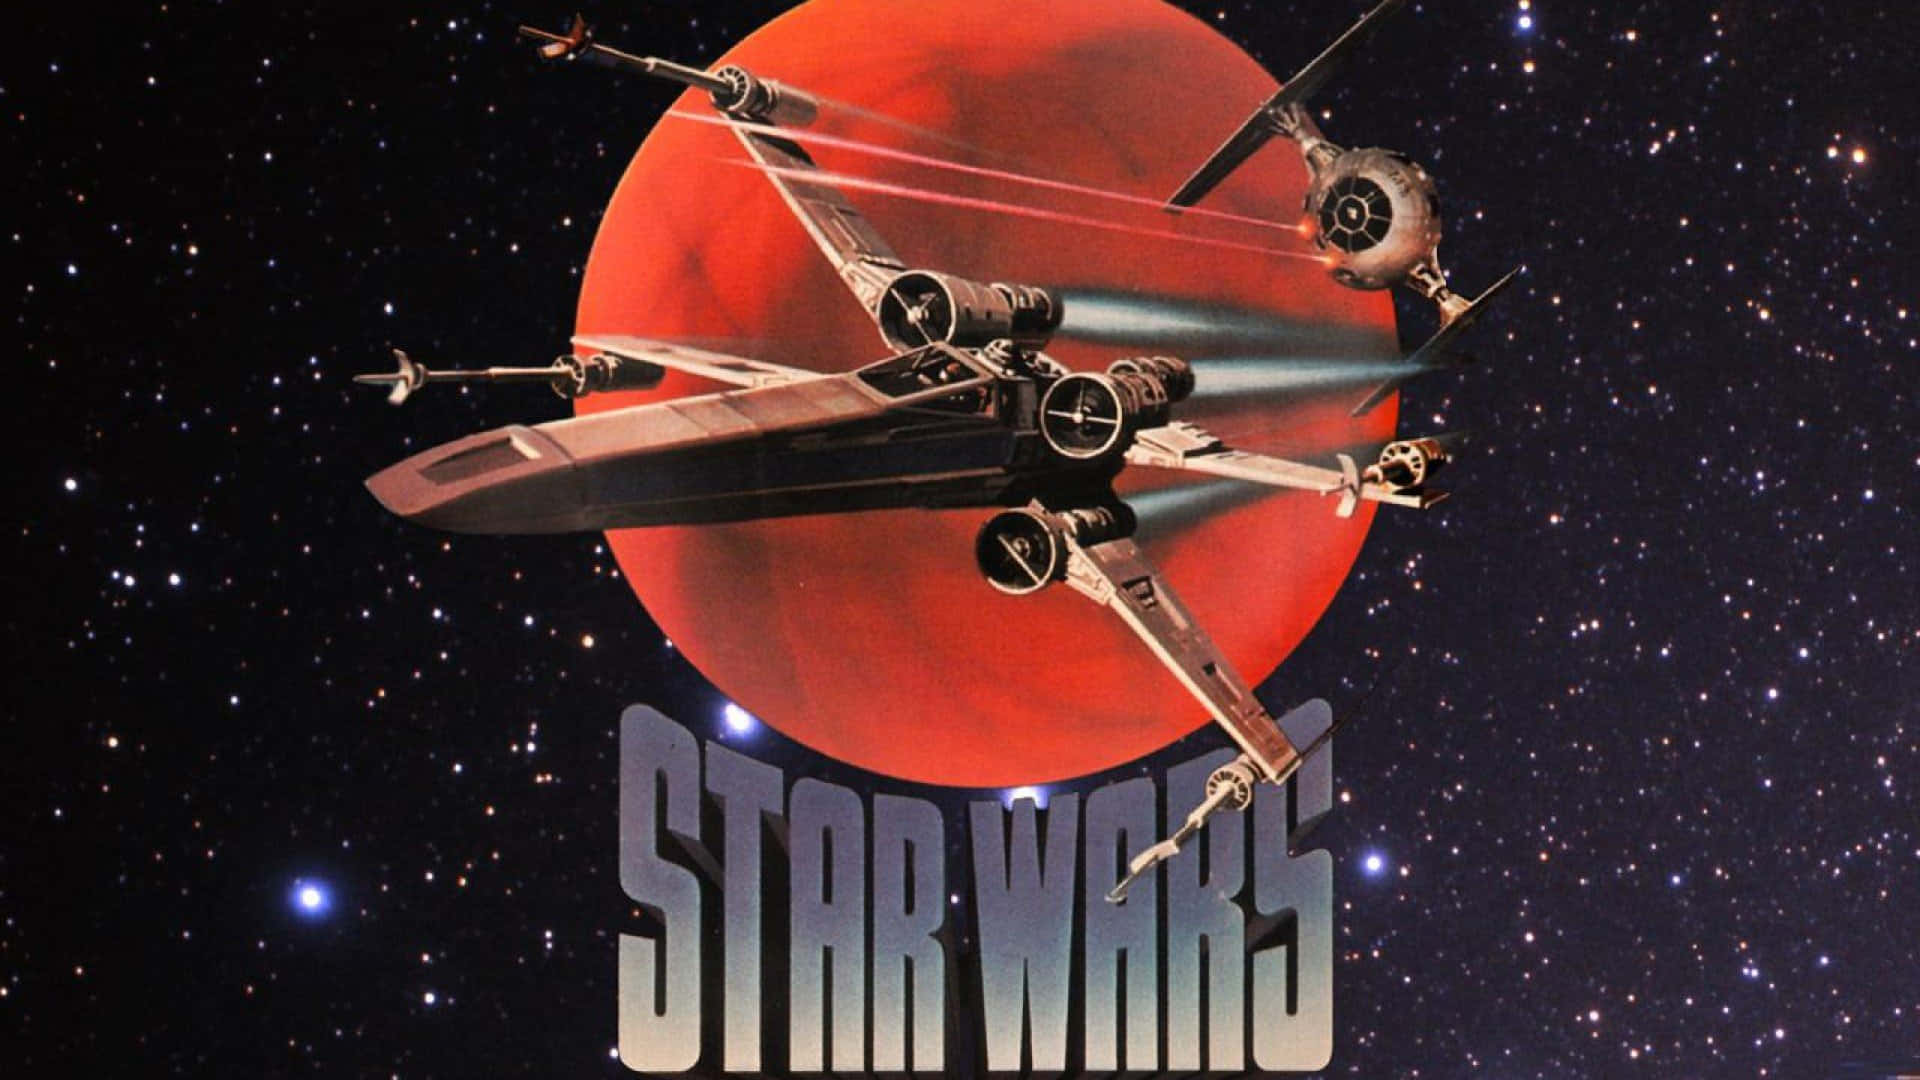 Soar into battle with an X-Wing in Star Wars Wallpaper